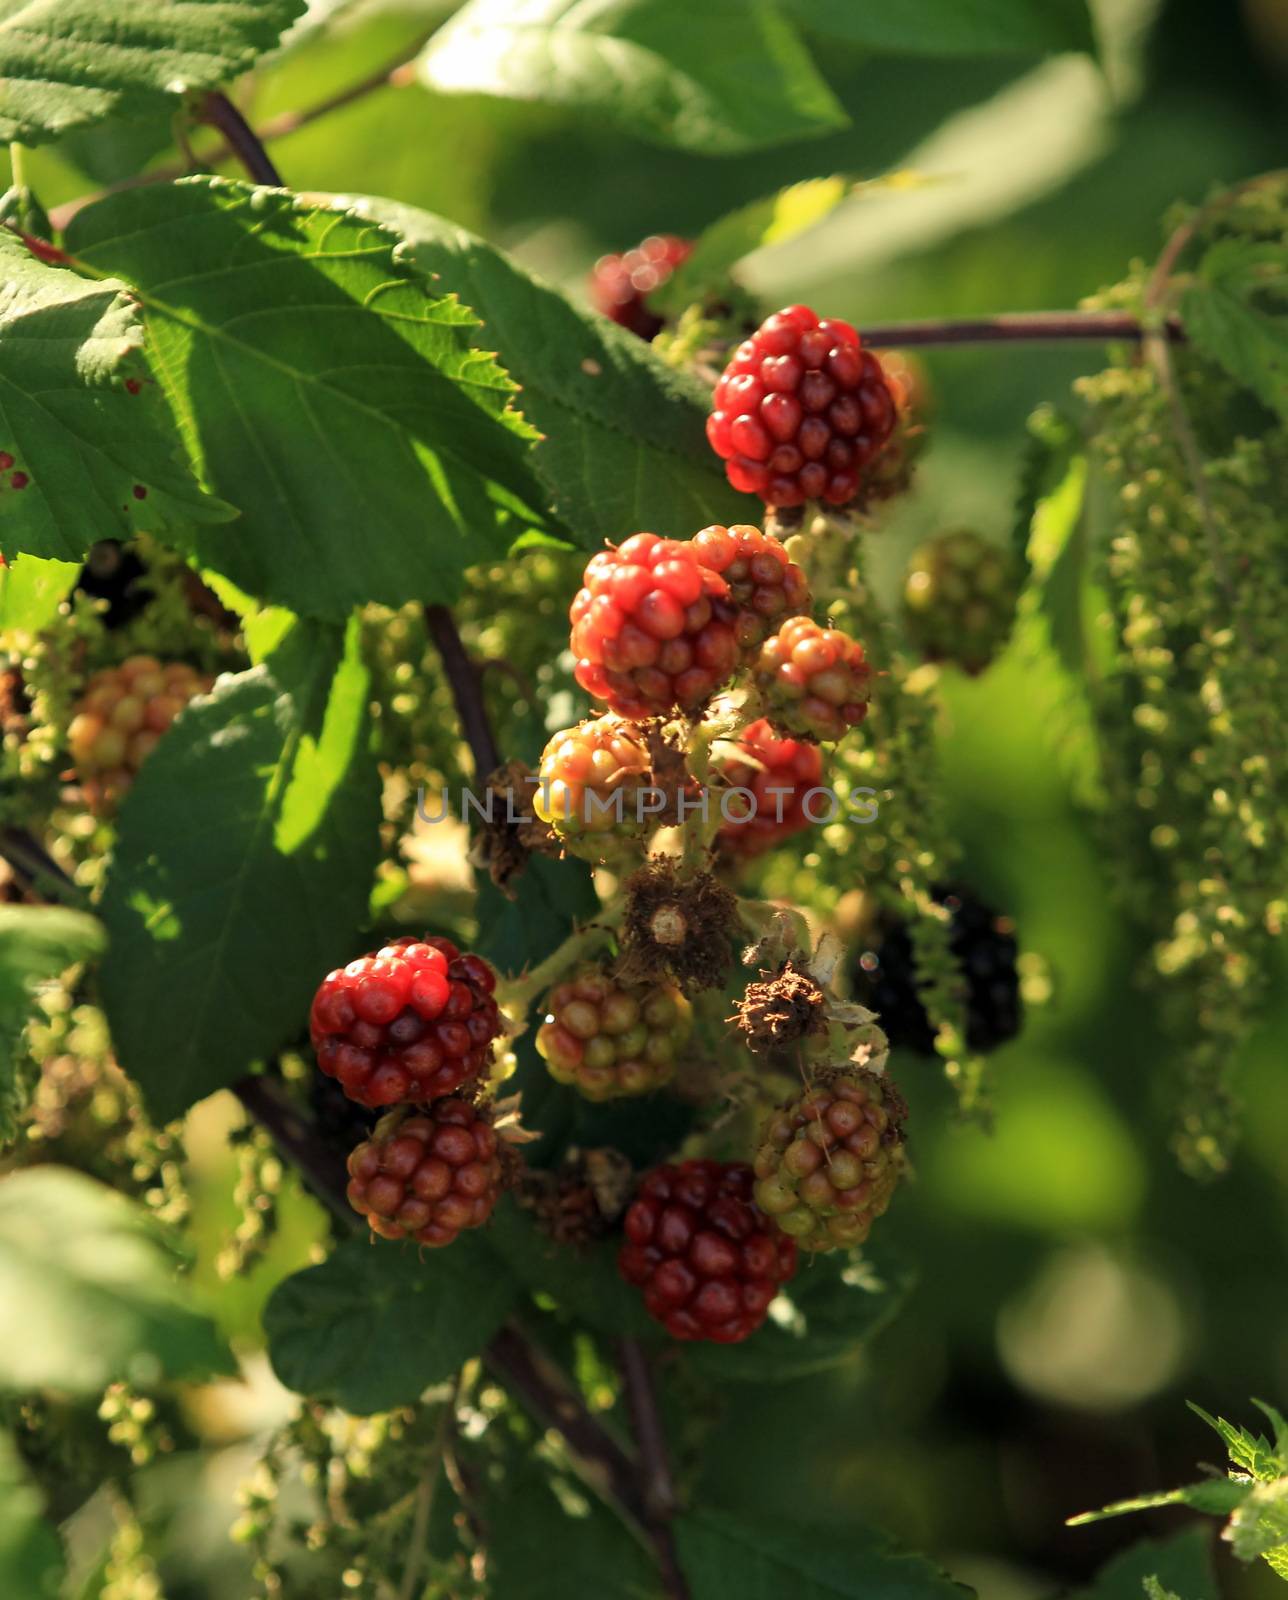 Non mature blackberry fruits by Elenaphotos21